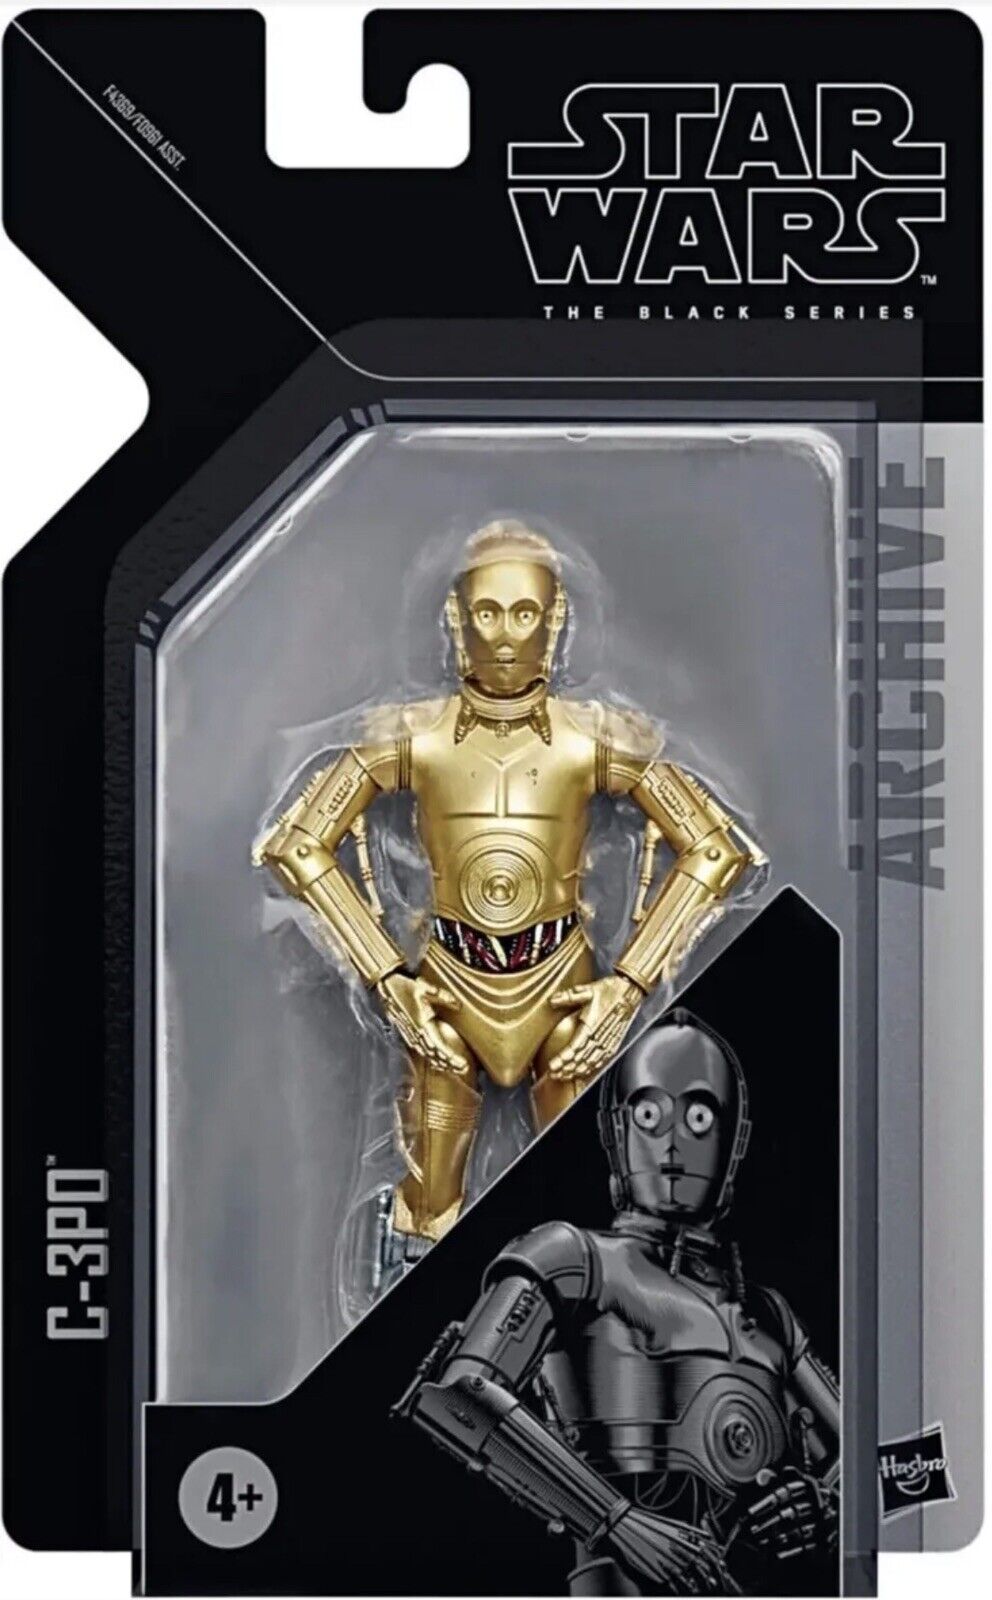 Star Wars The Black Series Archive C3PO 6" Action Figure New In Box C-3P0 Droids Hasbro F4369